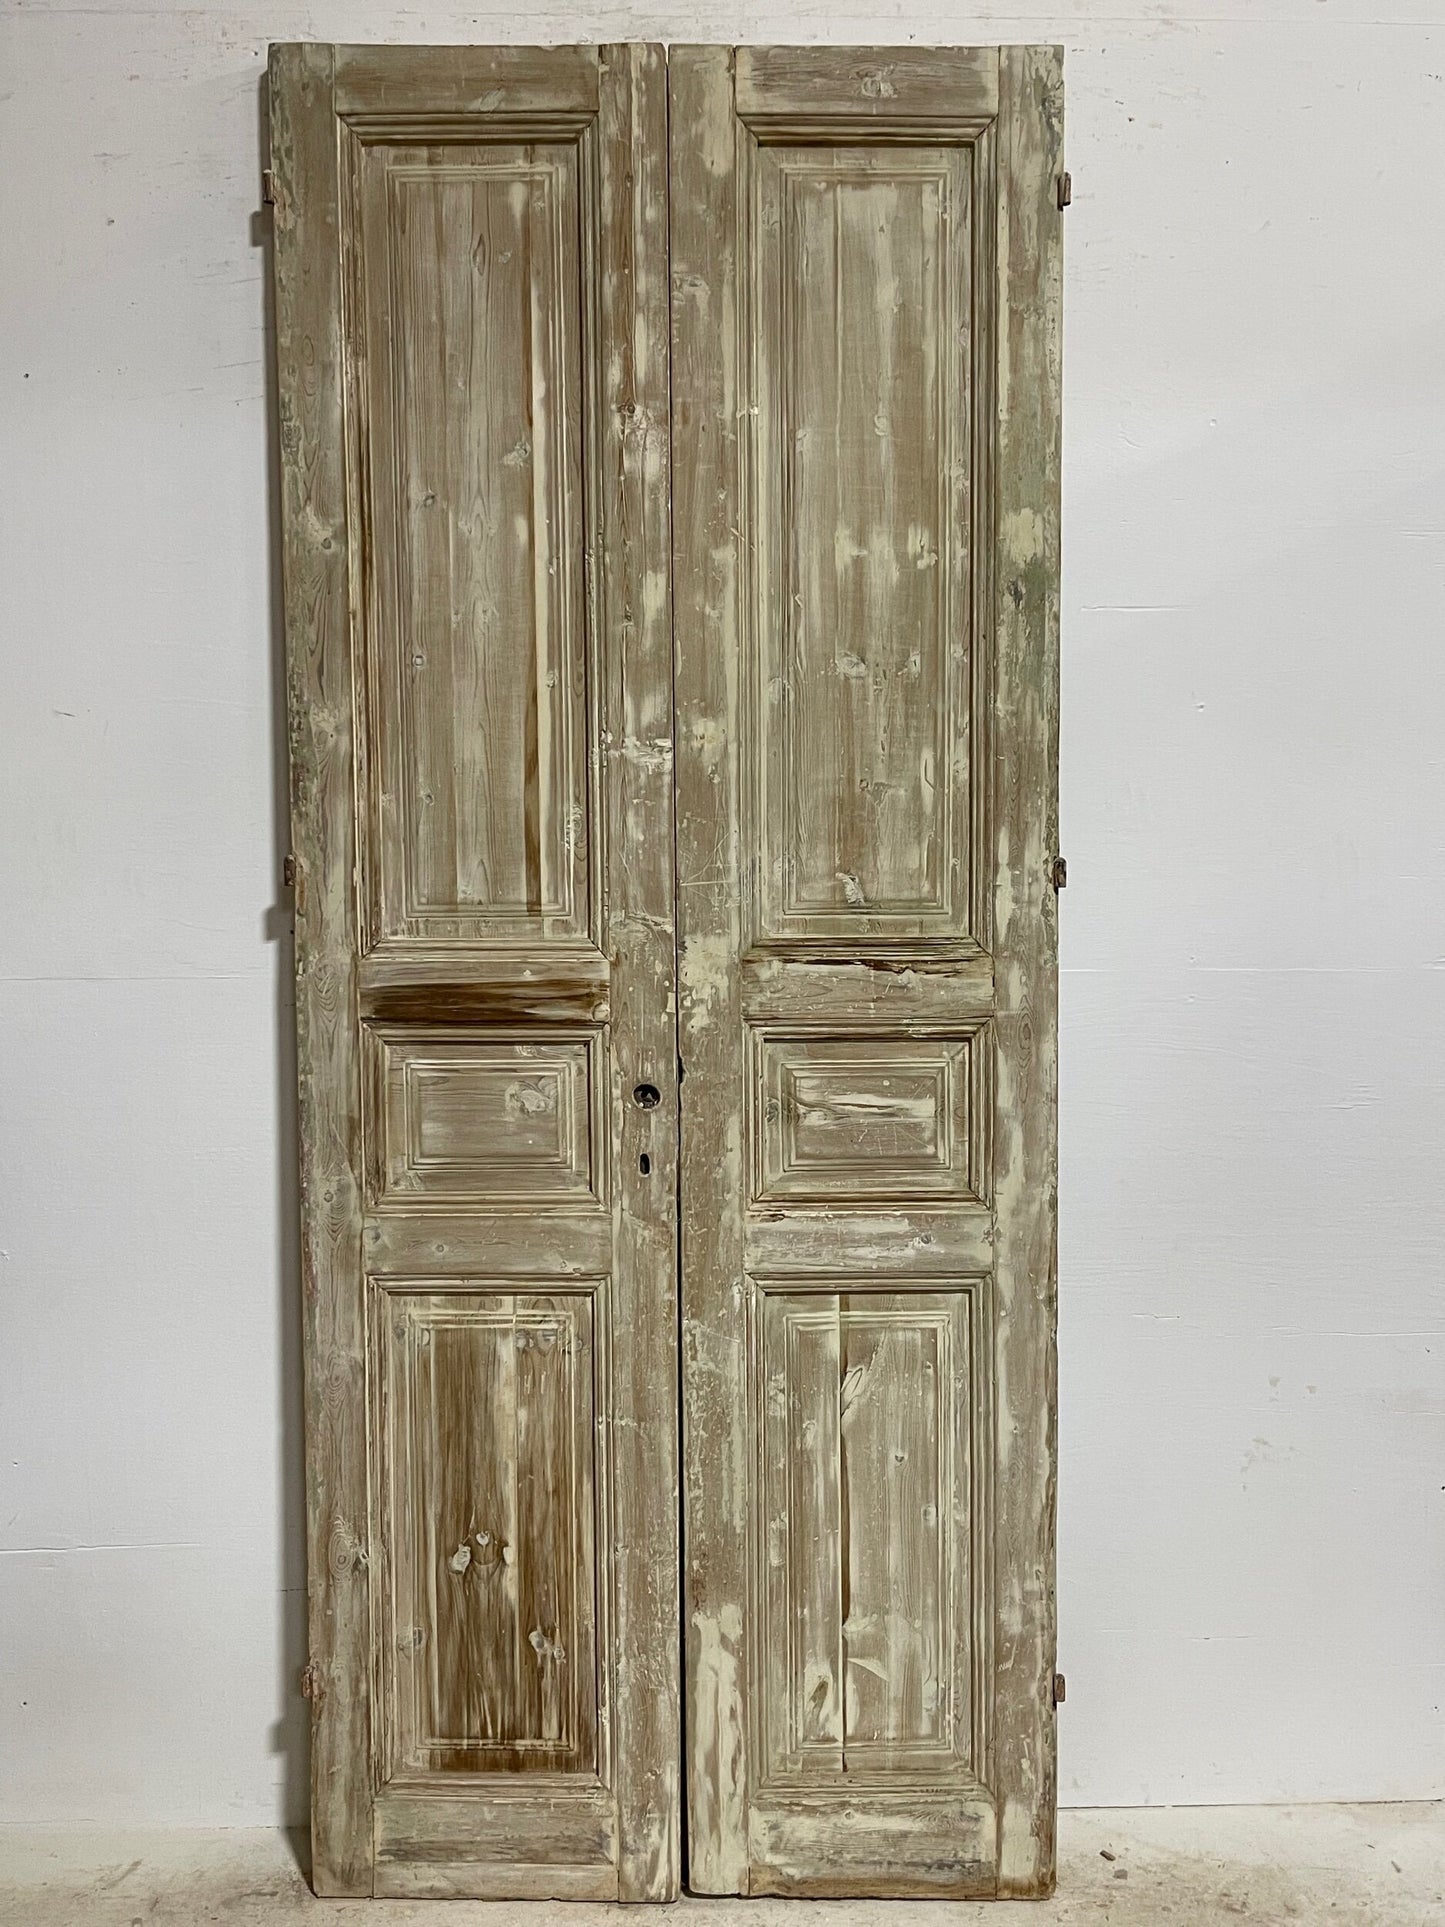 Antique French doors (93.25x38.75) H0161s